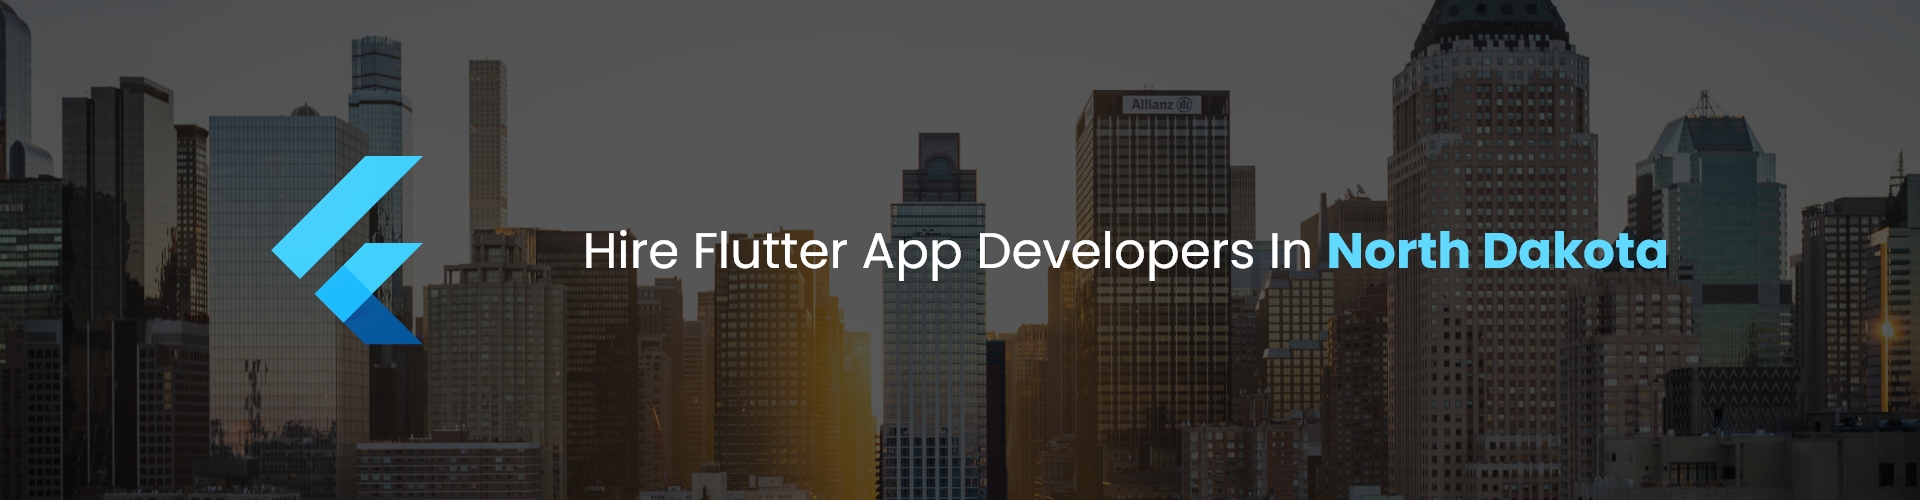 hire flutter app developers in north dakota